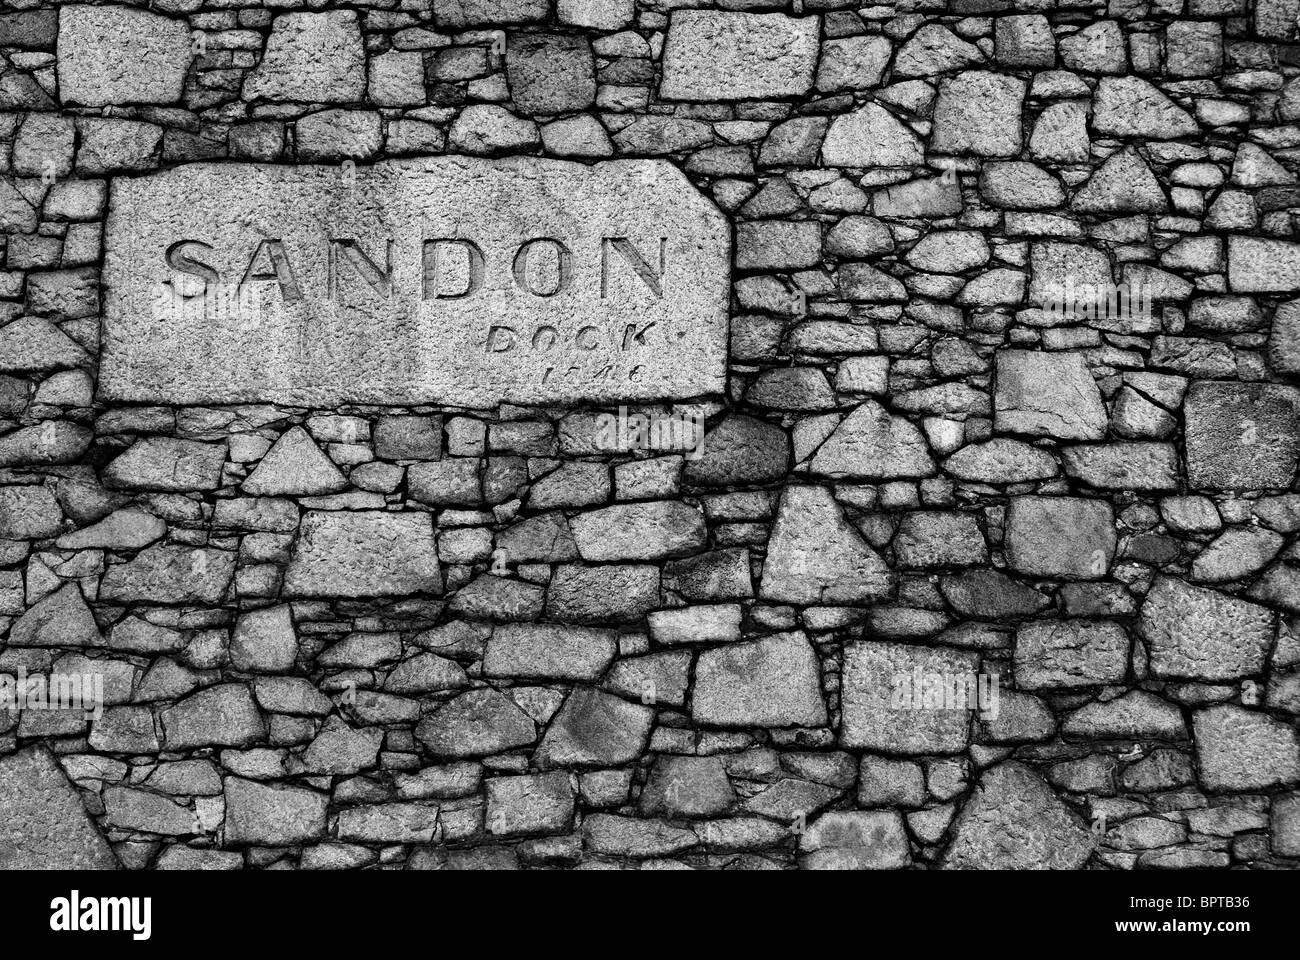 Sandon Dock name written in the dock wall. Stock Photo